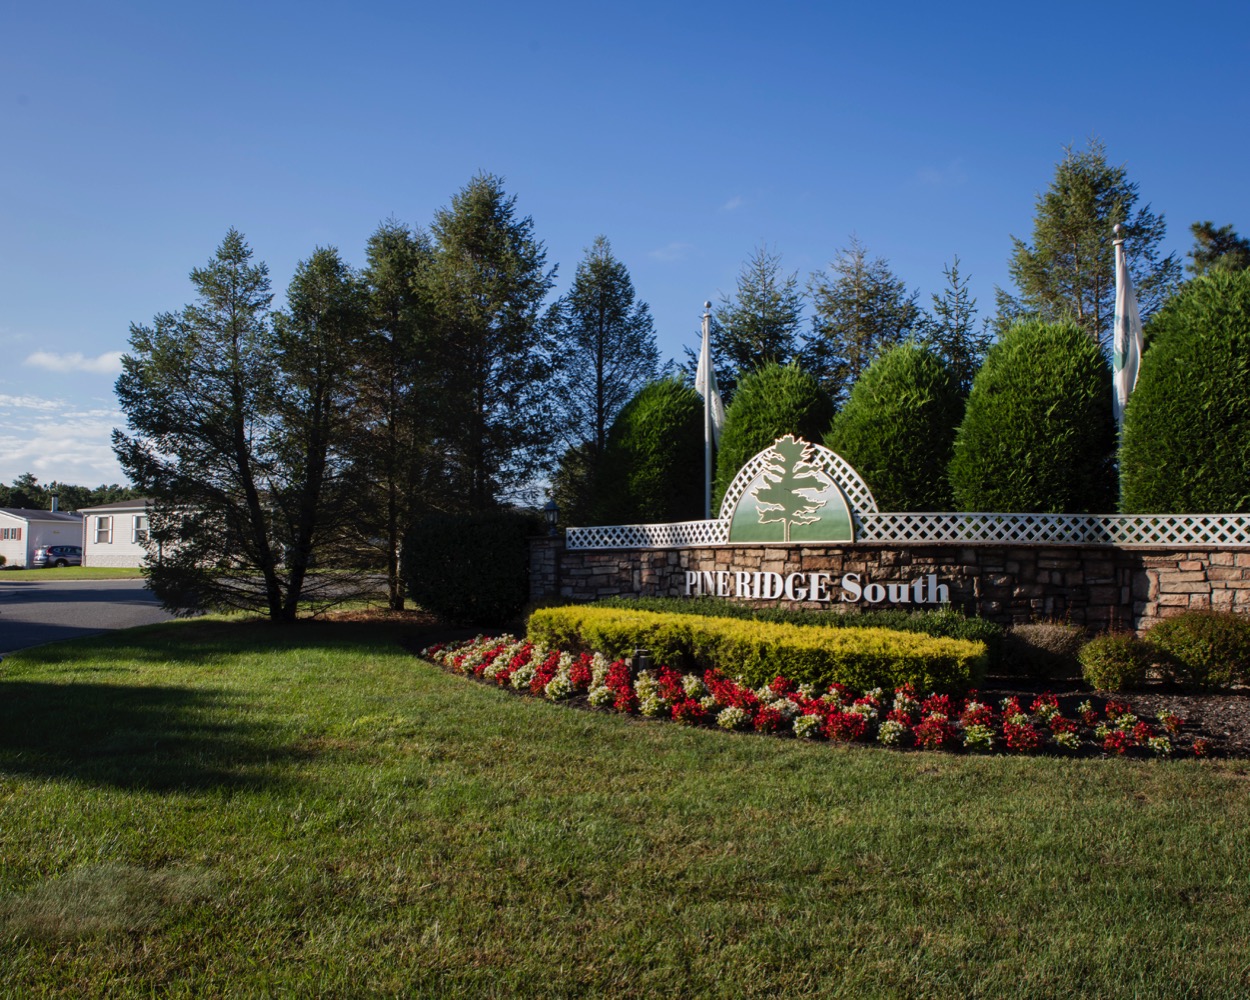 Pine Ridge South Community Entrance